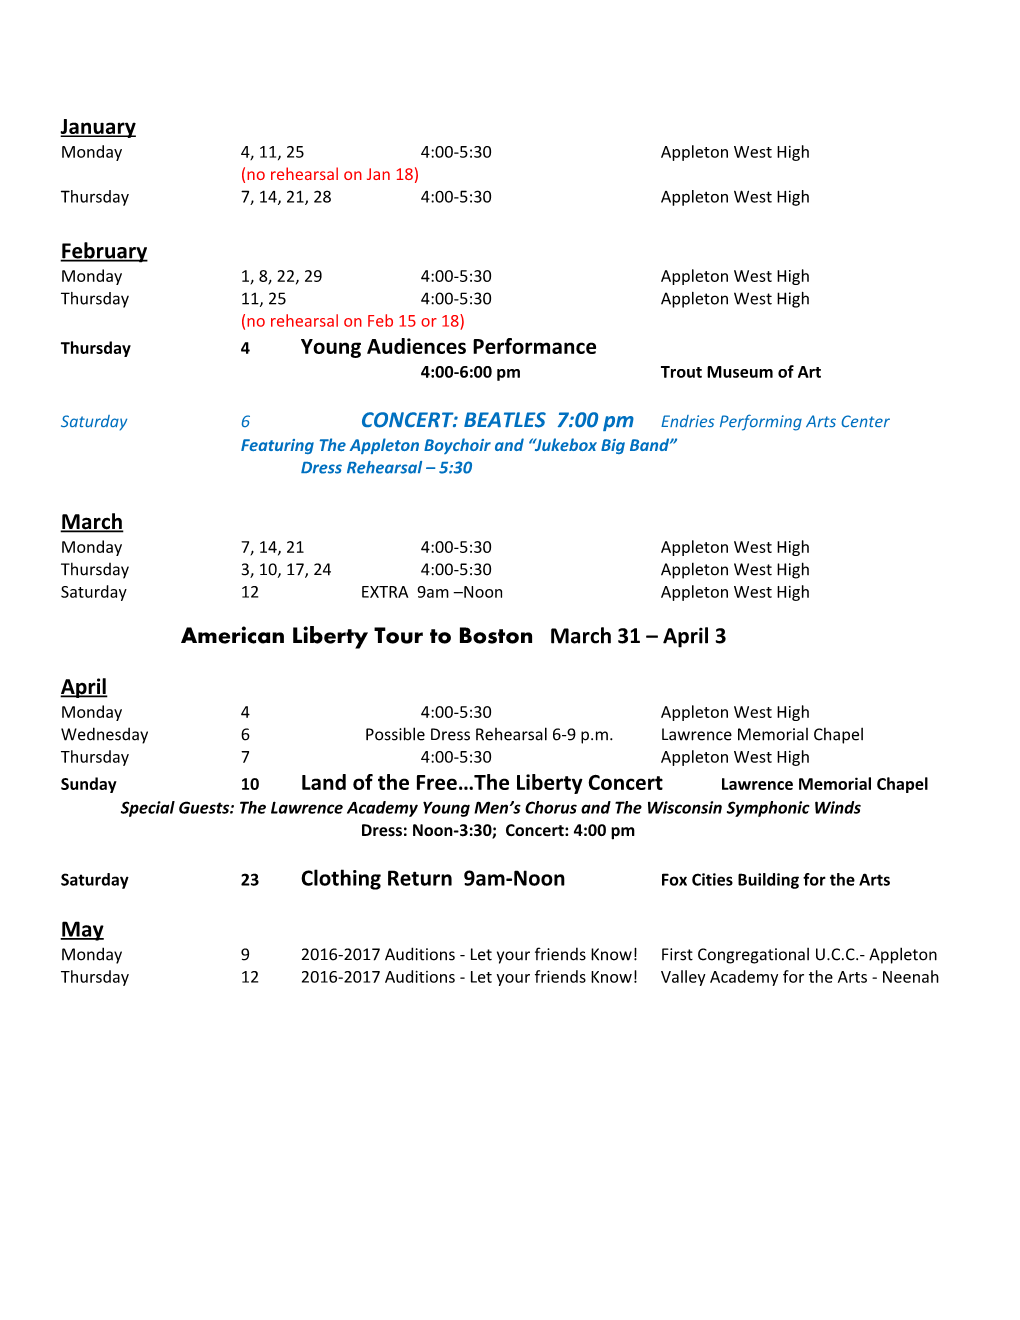 Appleton Boychoir Schedule 2015-2016